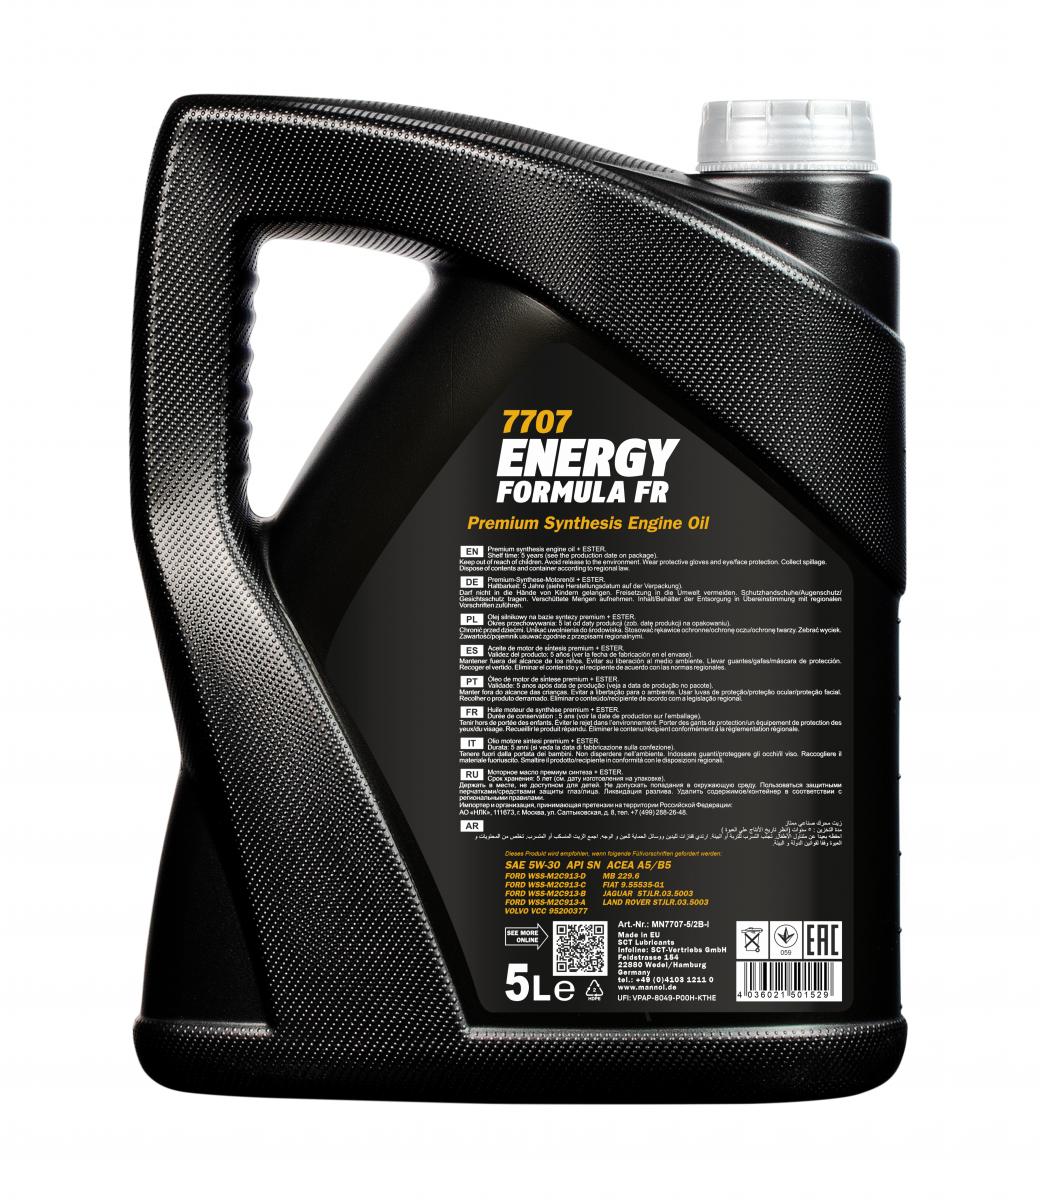 5 Liter MANNOL Energy Formula FR 7707 5W-30 API SN ACEA A5/B5 MB 229.6 Motoröl